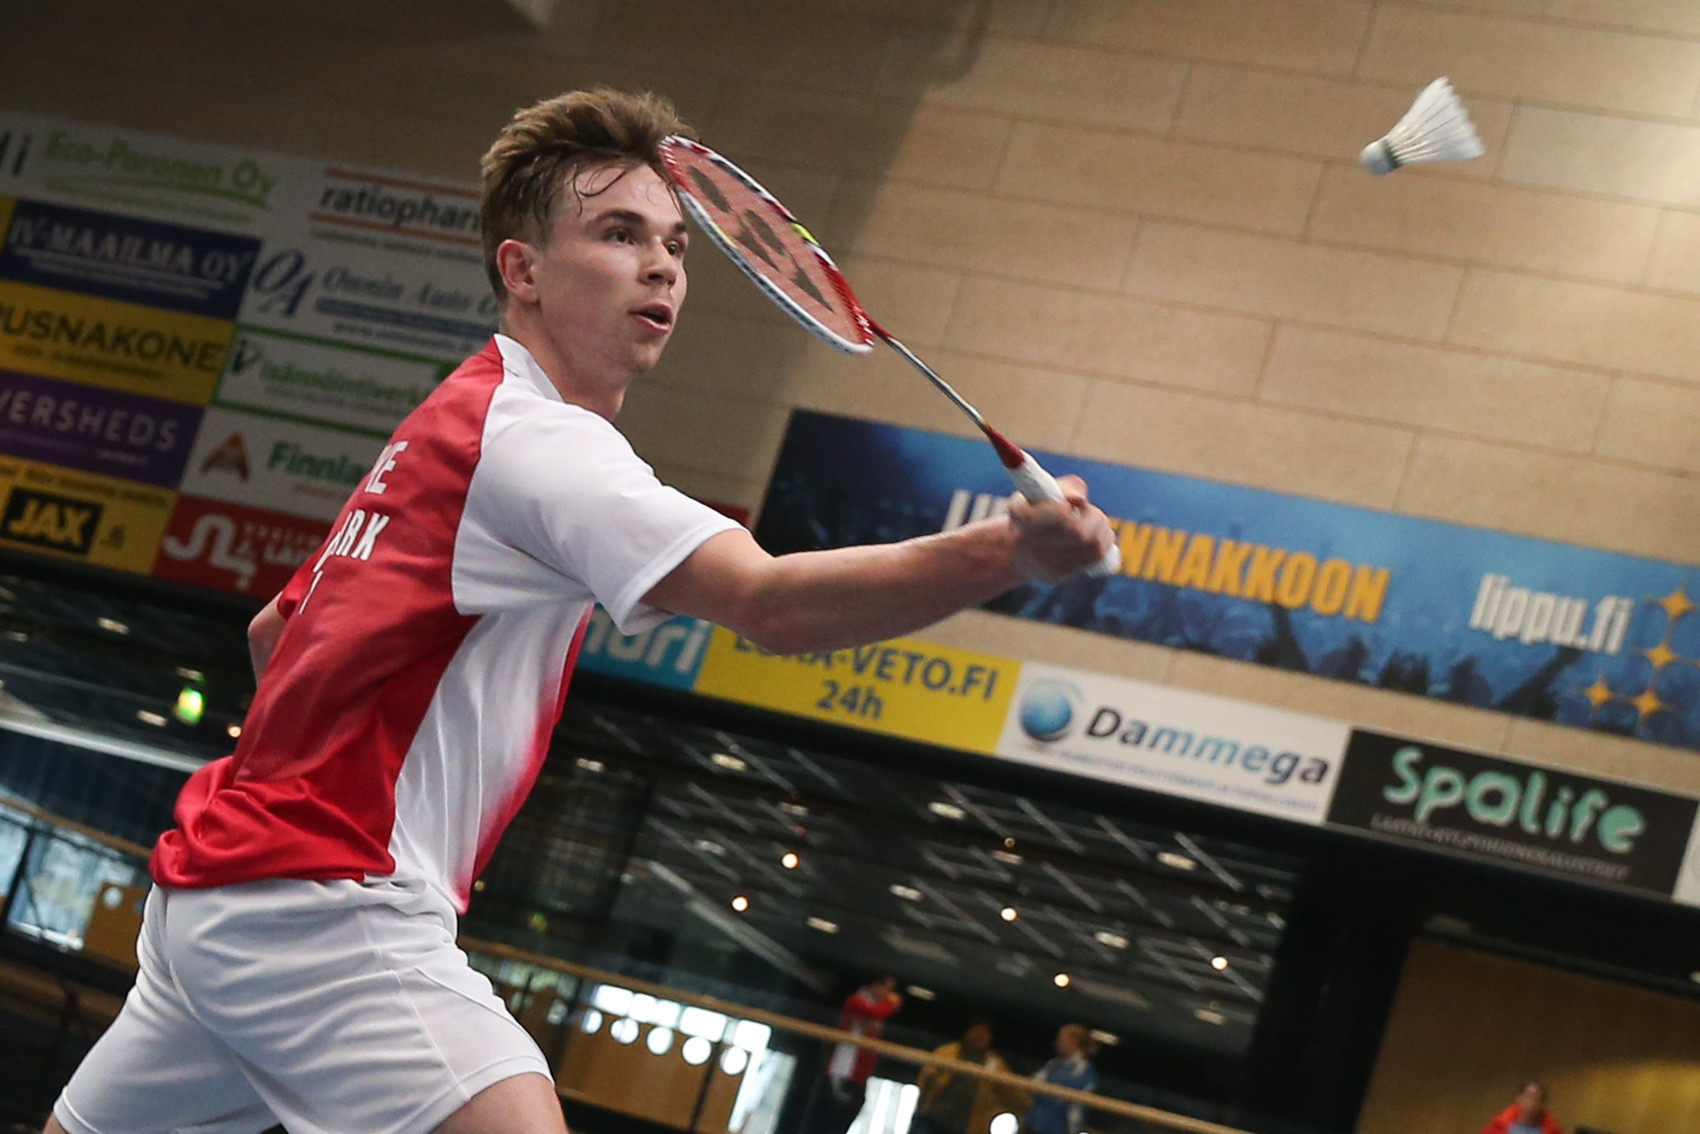 Denmark's Rasmus Gemke won the men's singles crown ©Badminton Europe